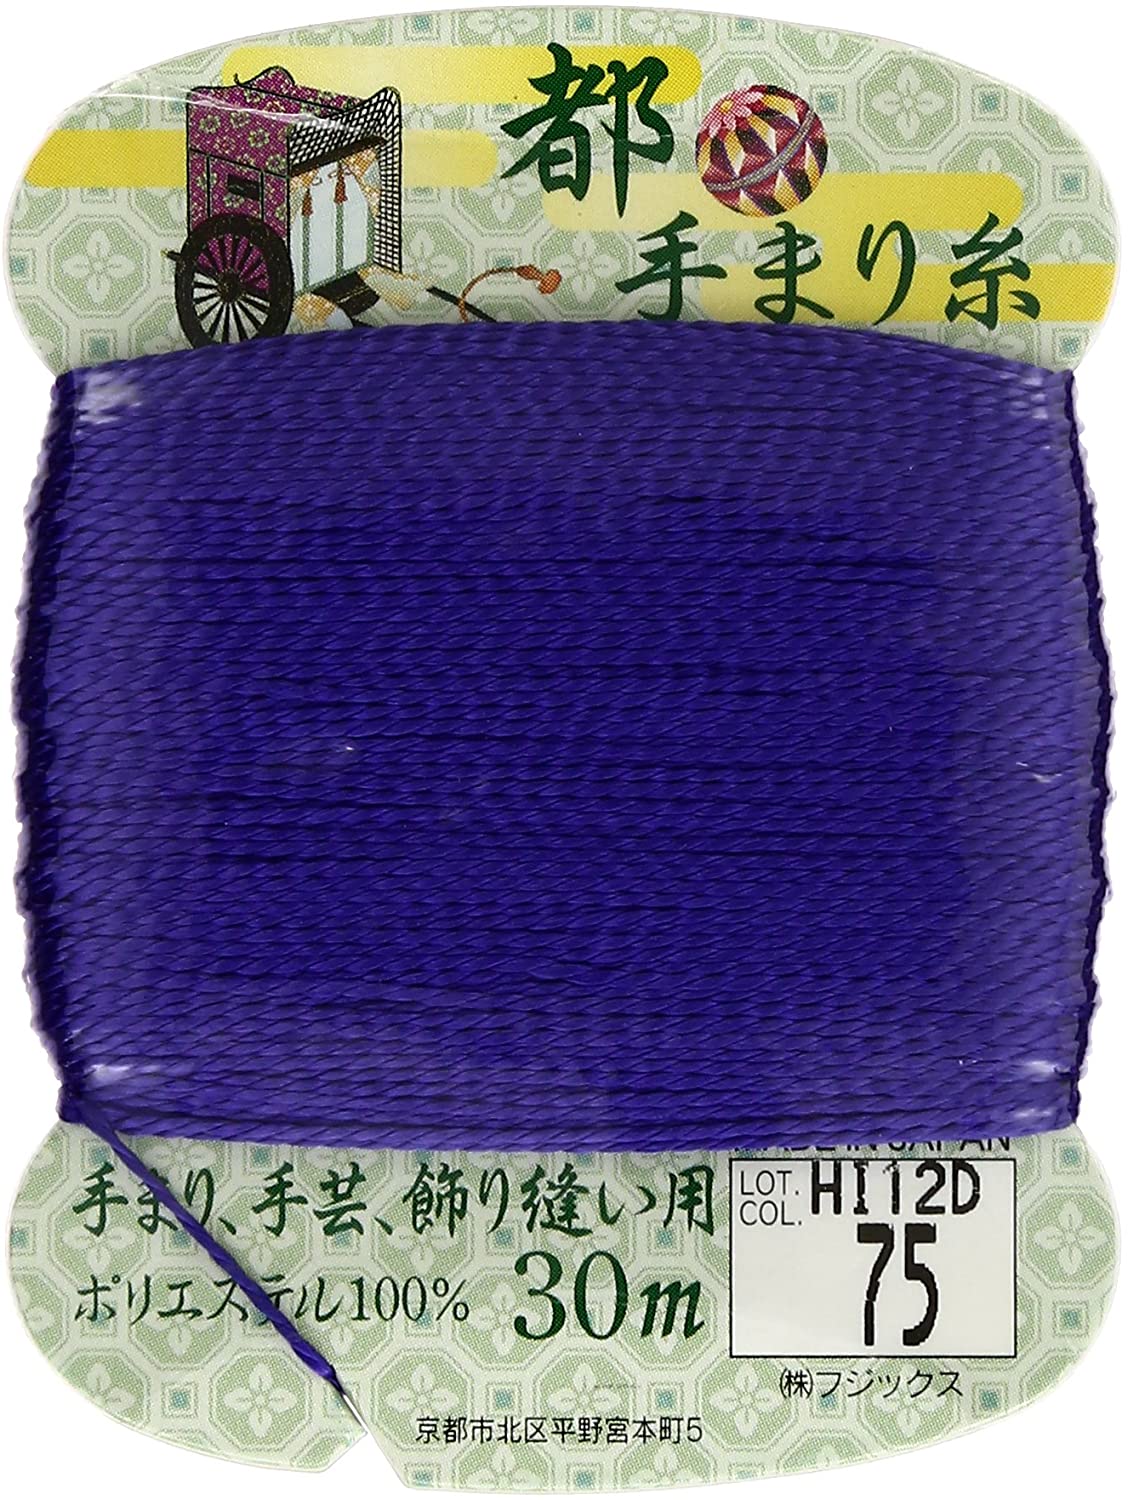 FK1212-75 都手まり糸 30m巻 (枚)